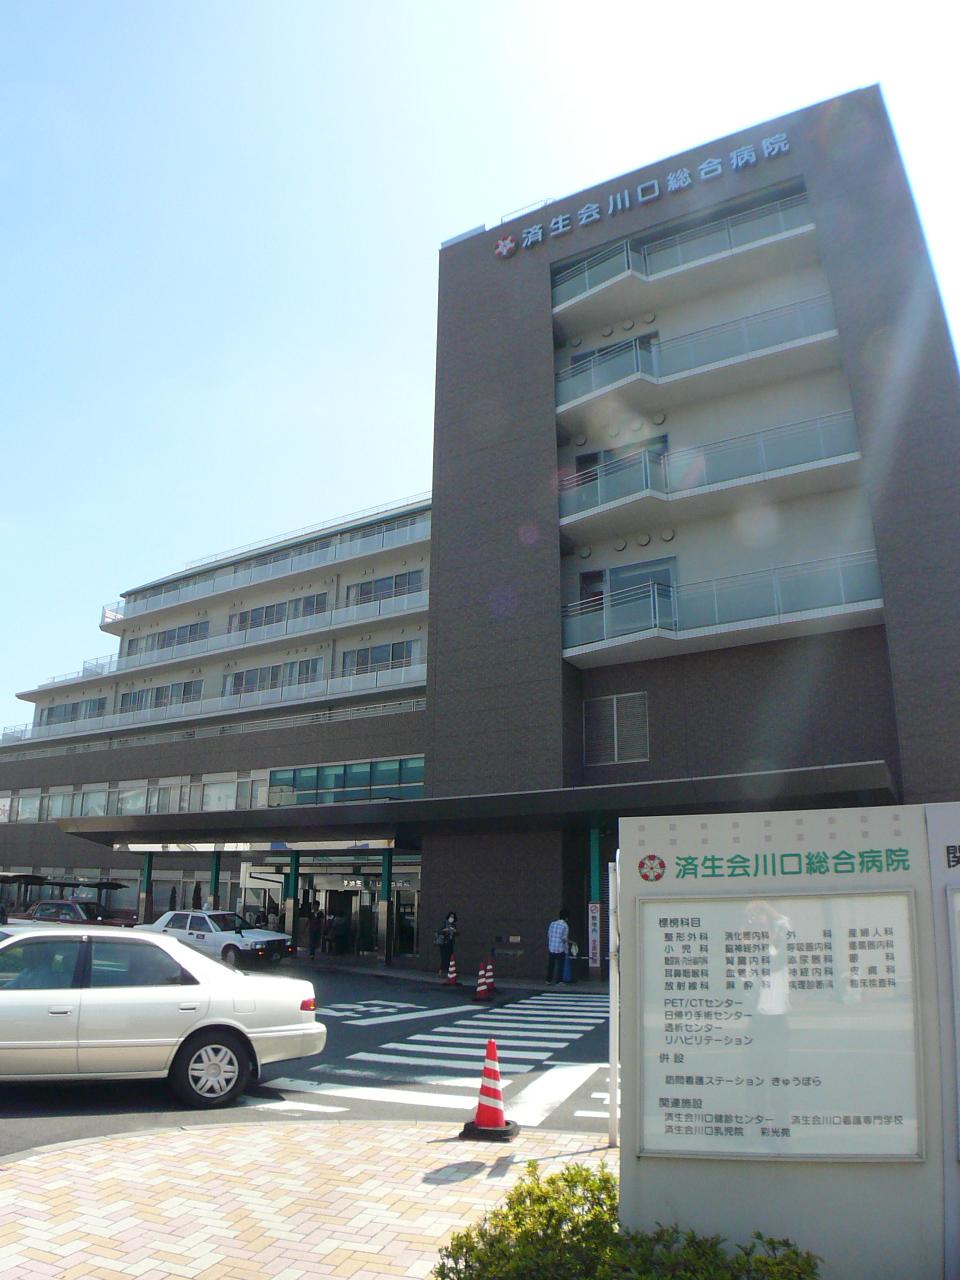 Hospital. 451m until the medical corporation high Jing Chi Kawaguchi hospital